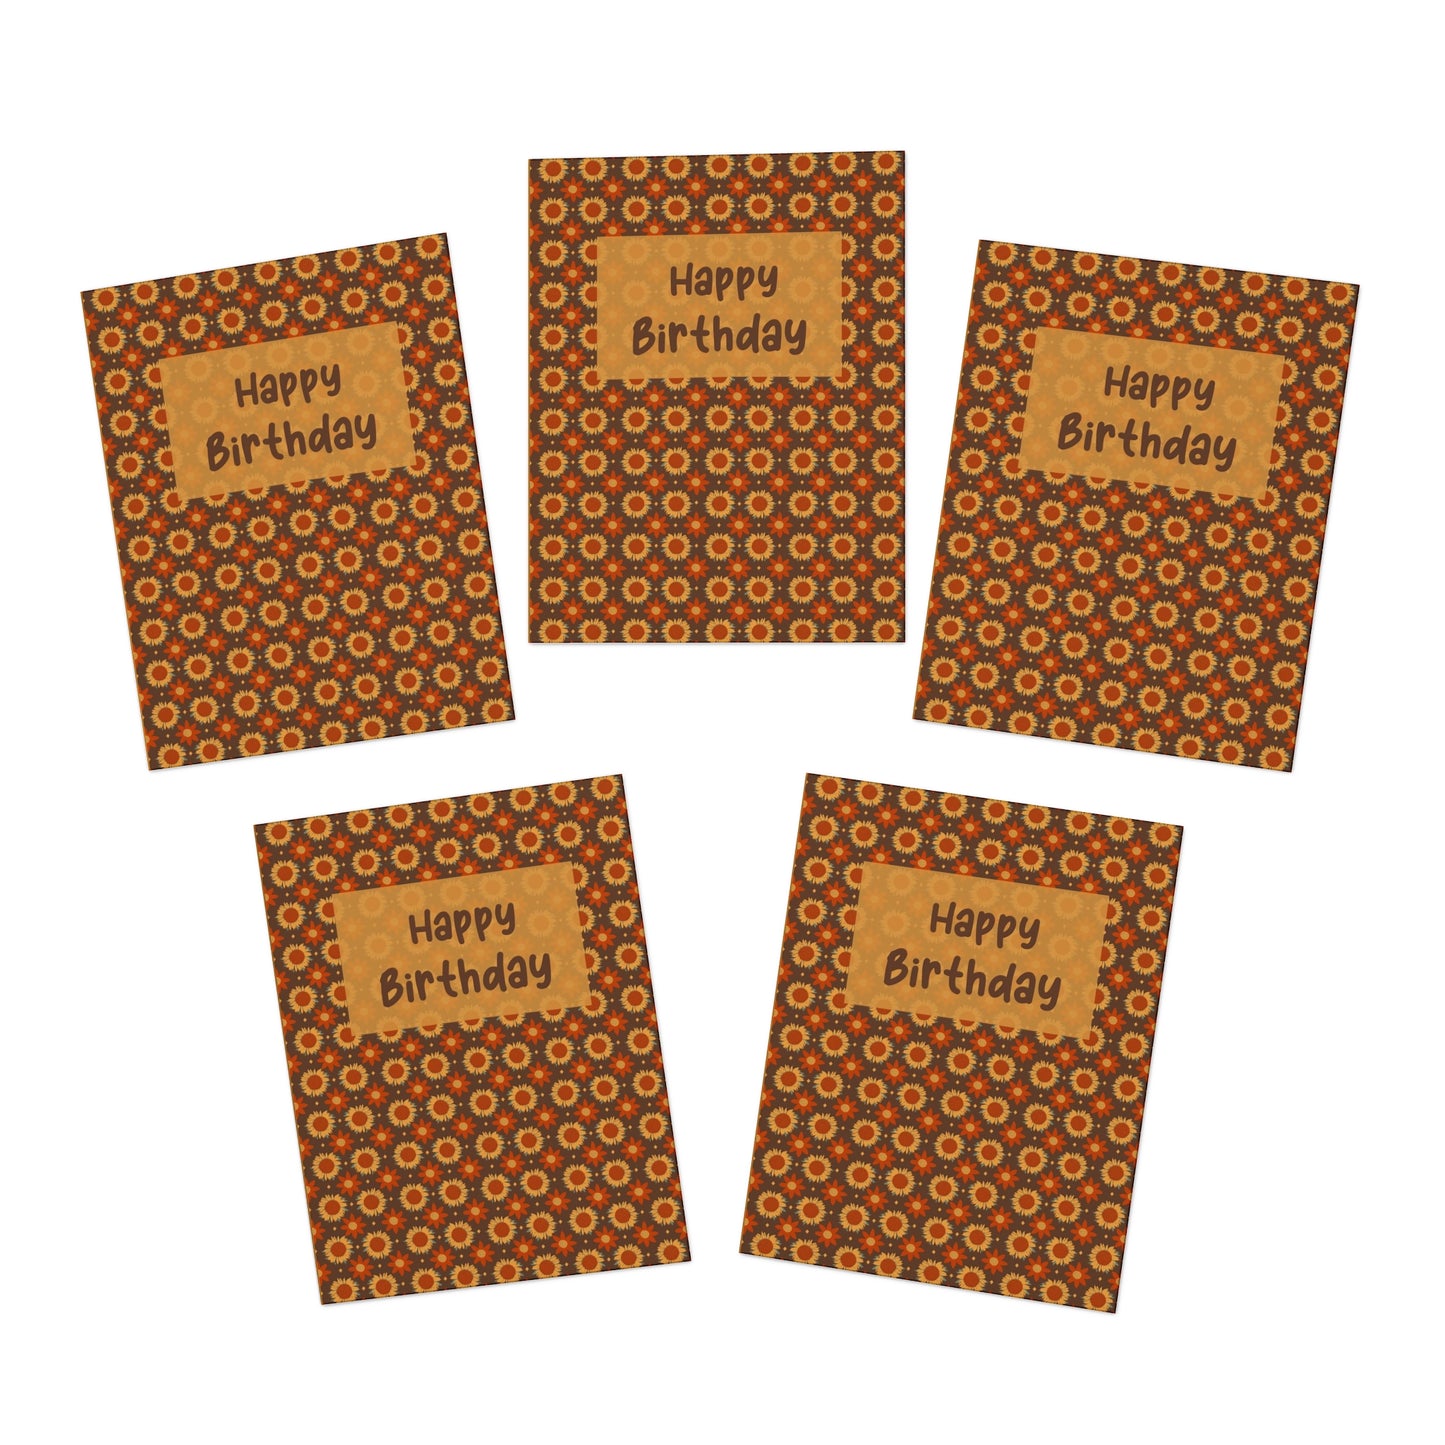 Retro Golden Sunflowers Birthday Greeting Cards (5-Pack)